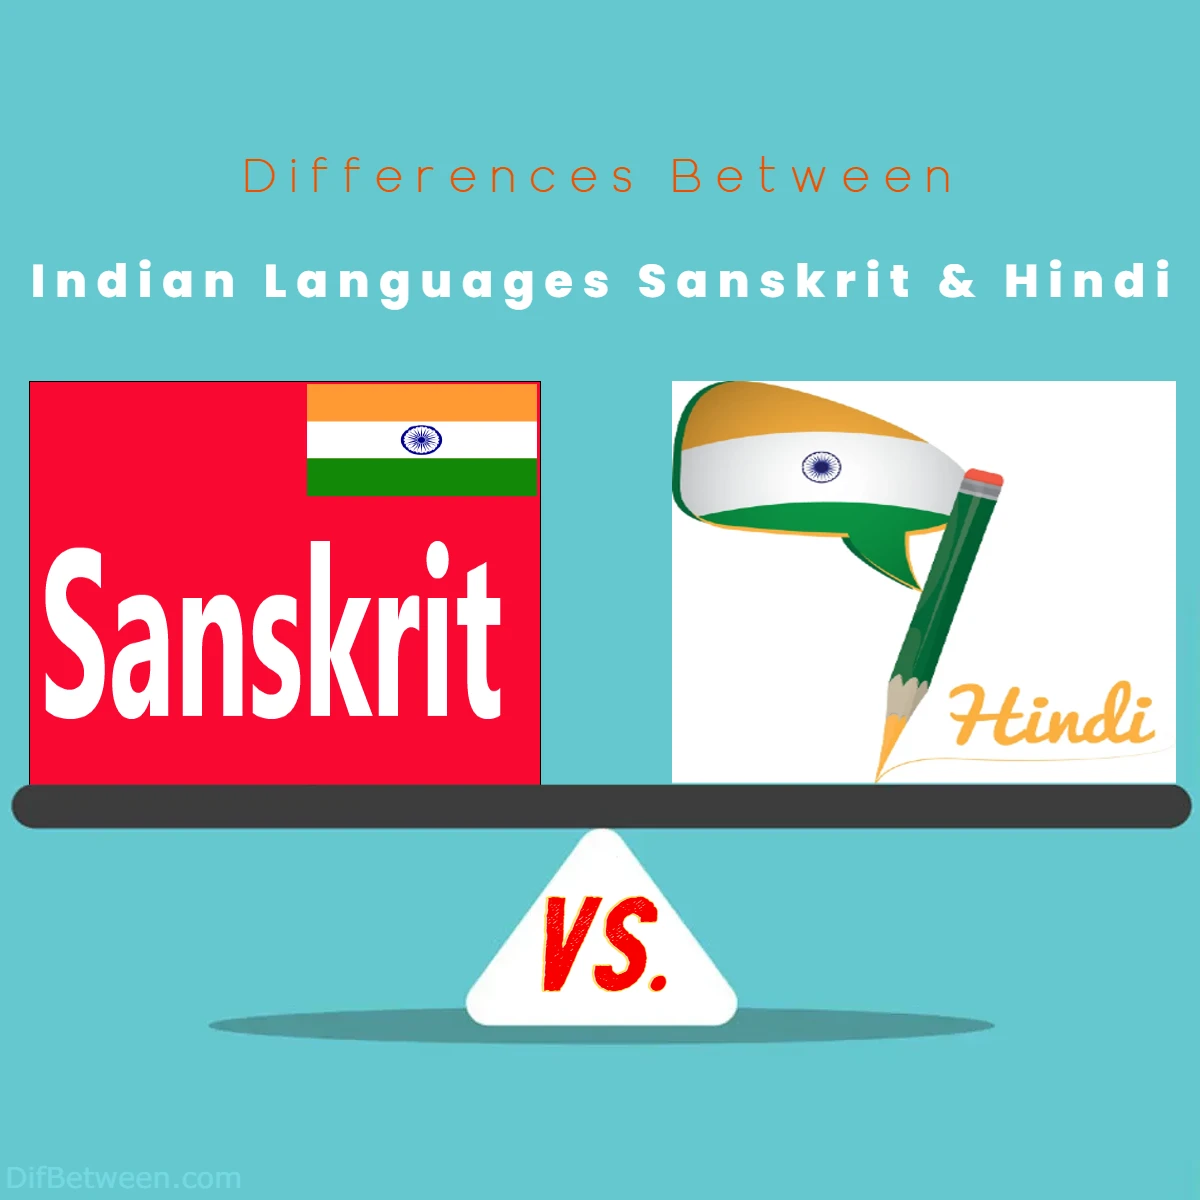 Differences Between Indian Languages Sanskrit vs Hindi